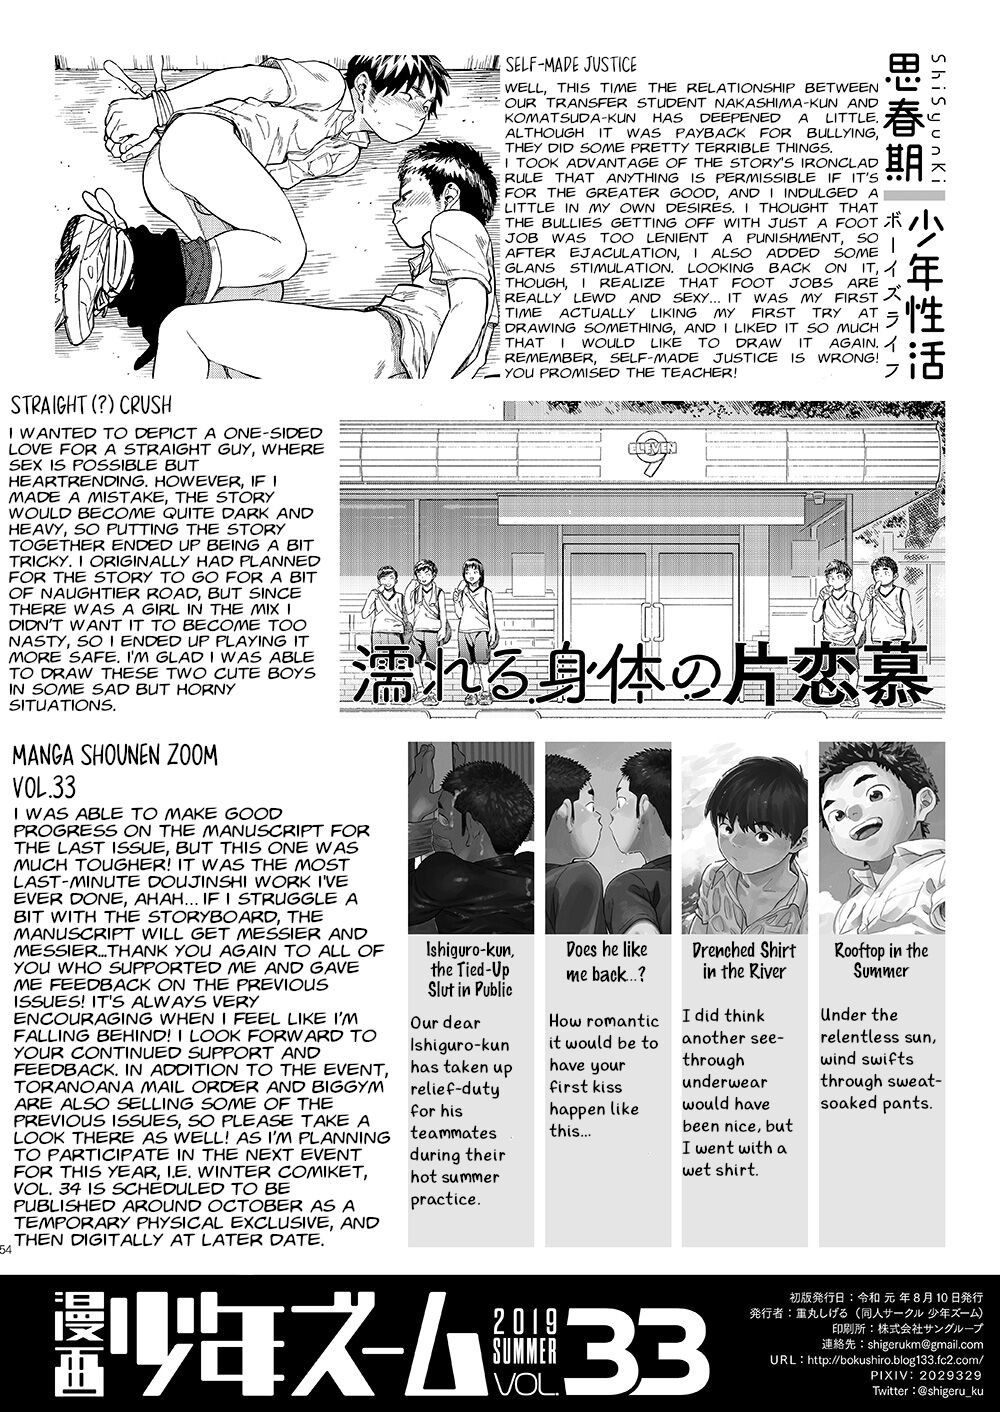 Manga Shounen Zoom Vol. 33 - Foto 54